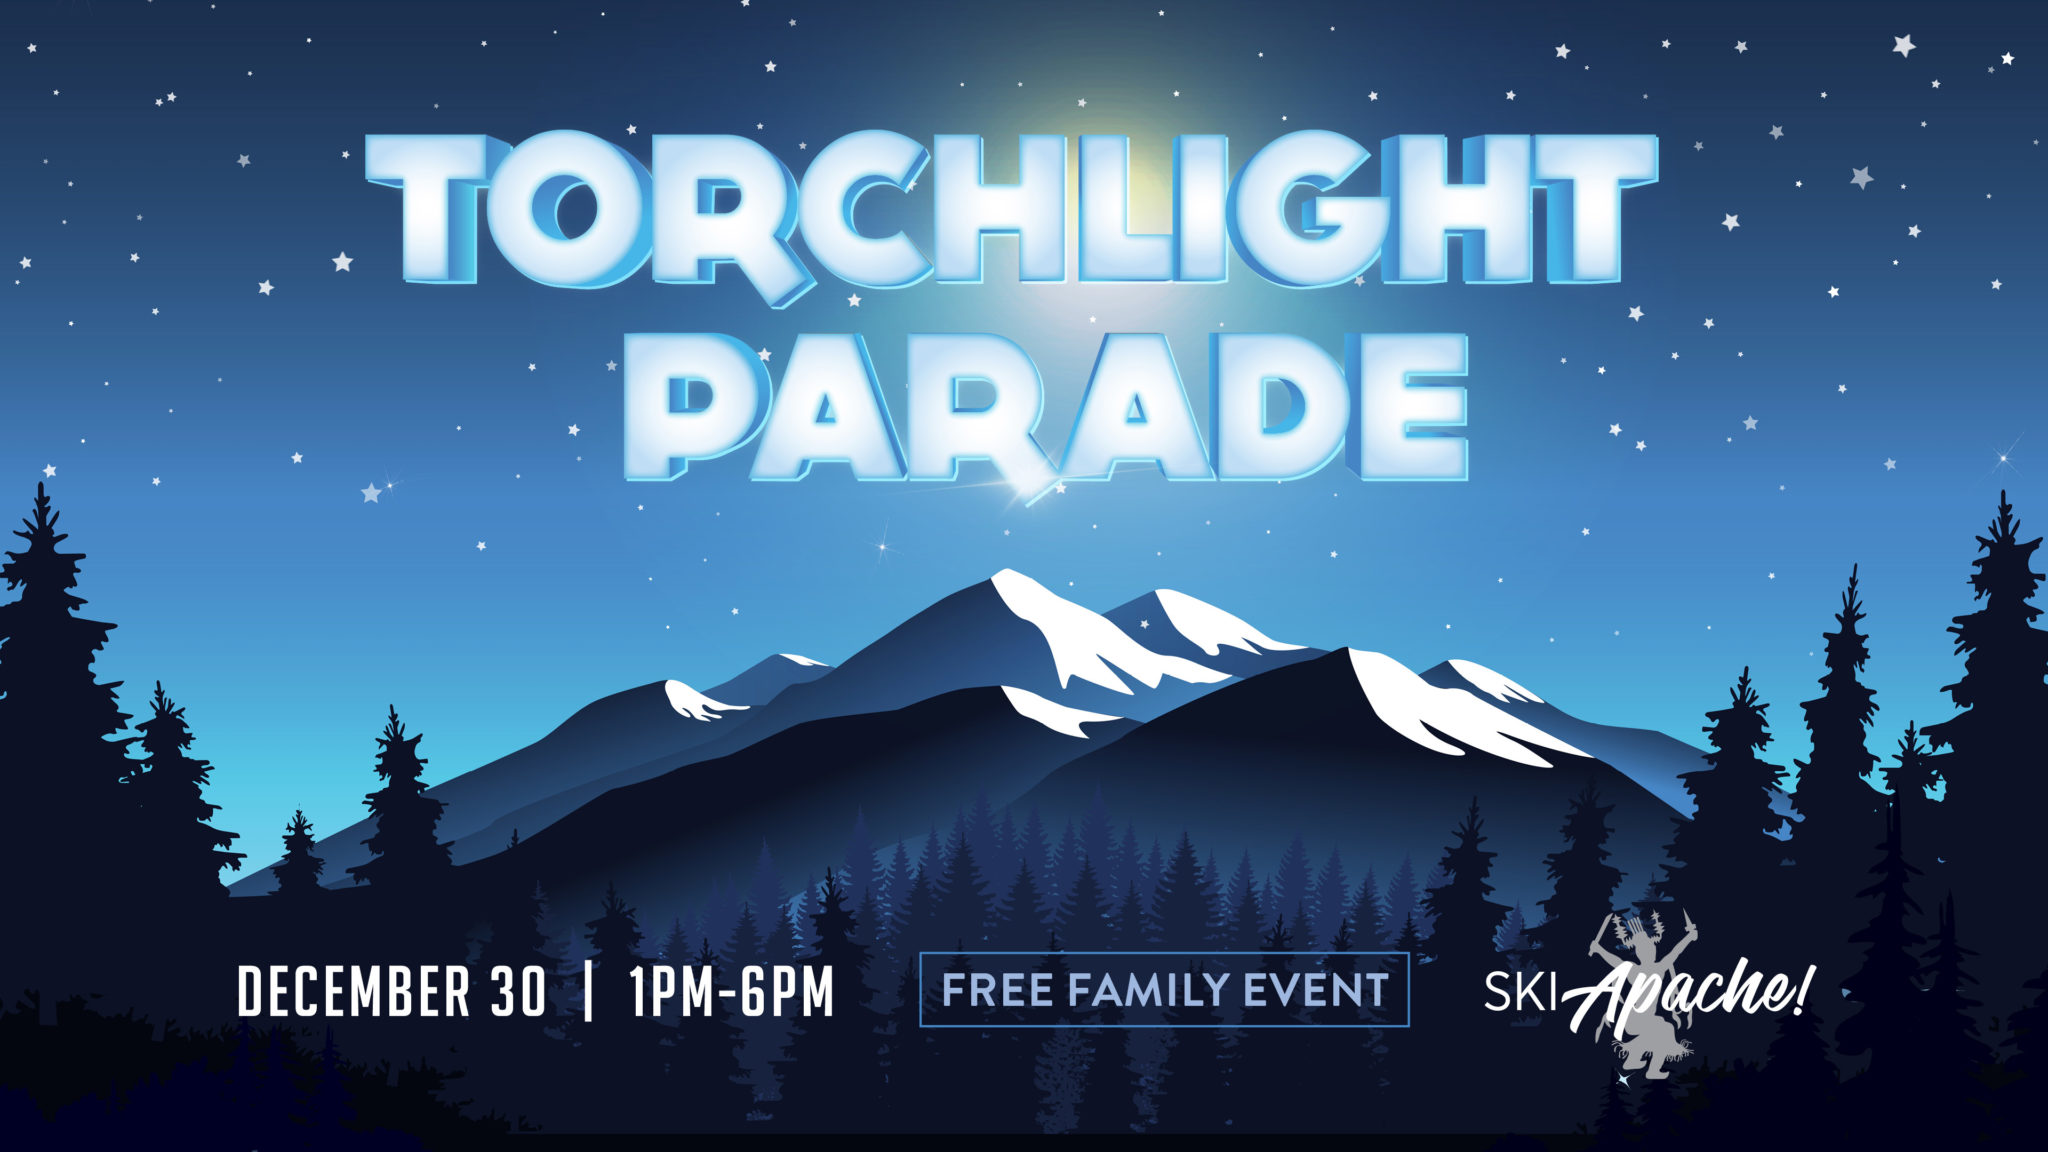 Torchlight Parade at Ski Apache Saturday, December 30